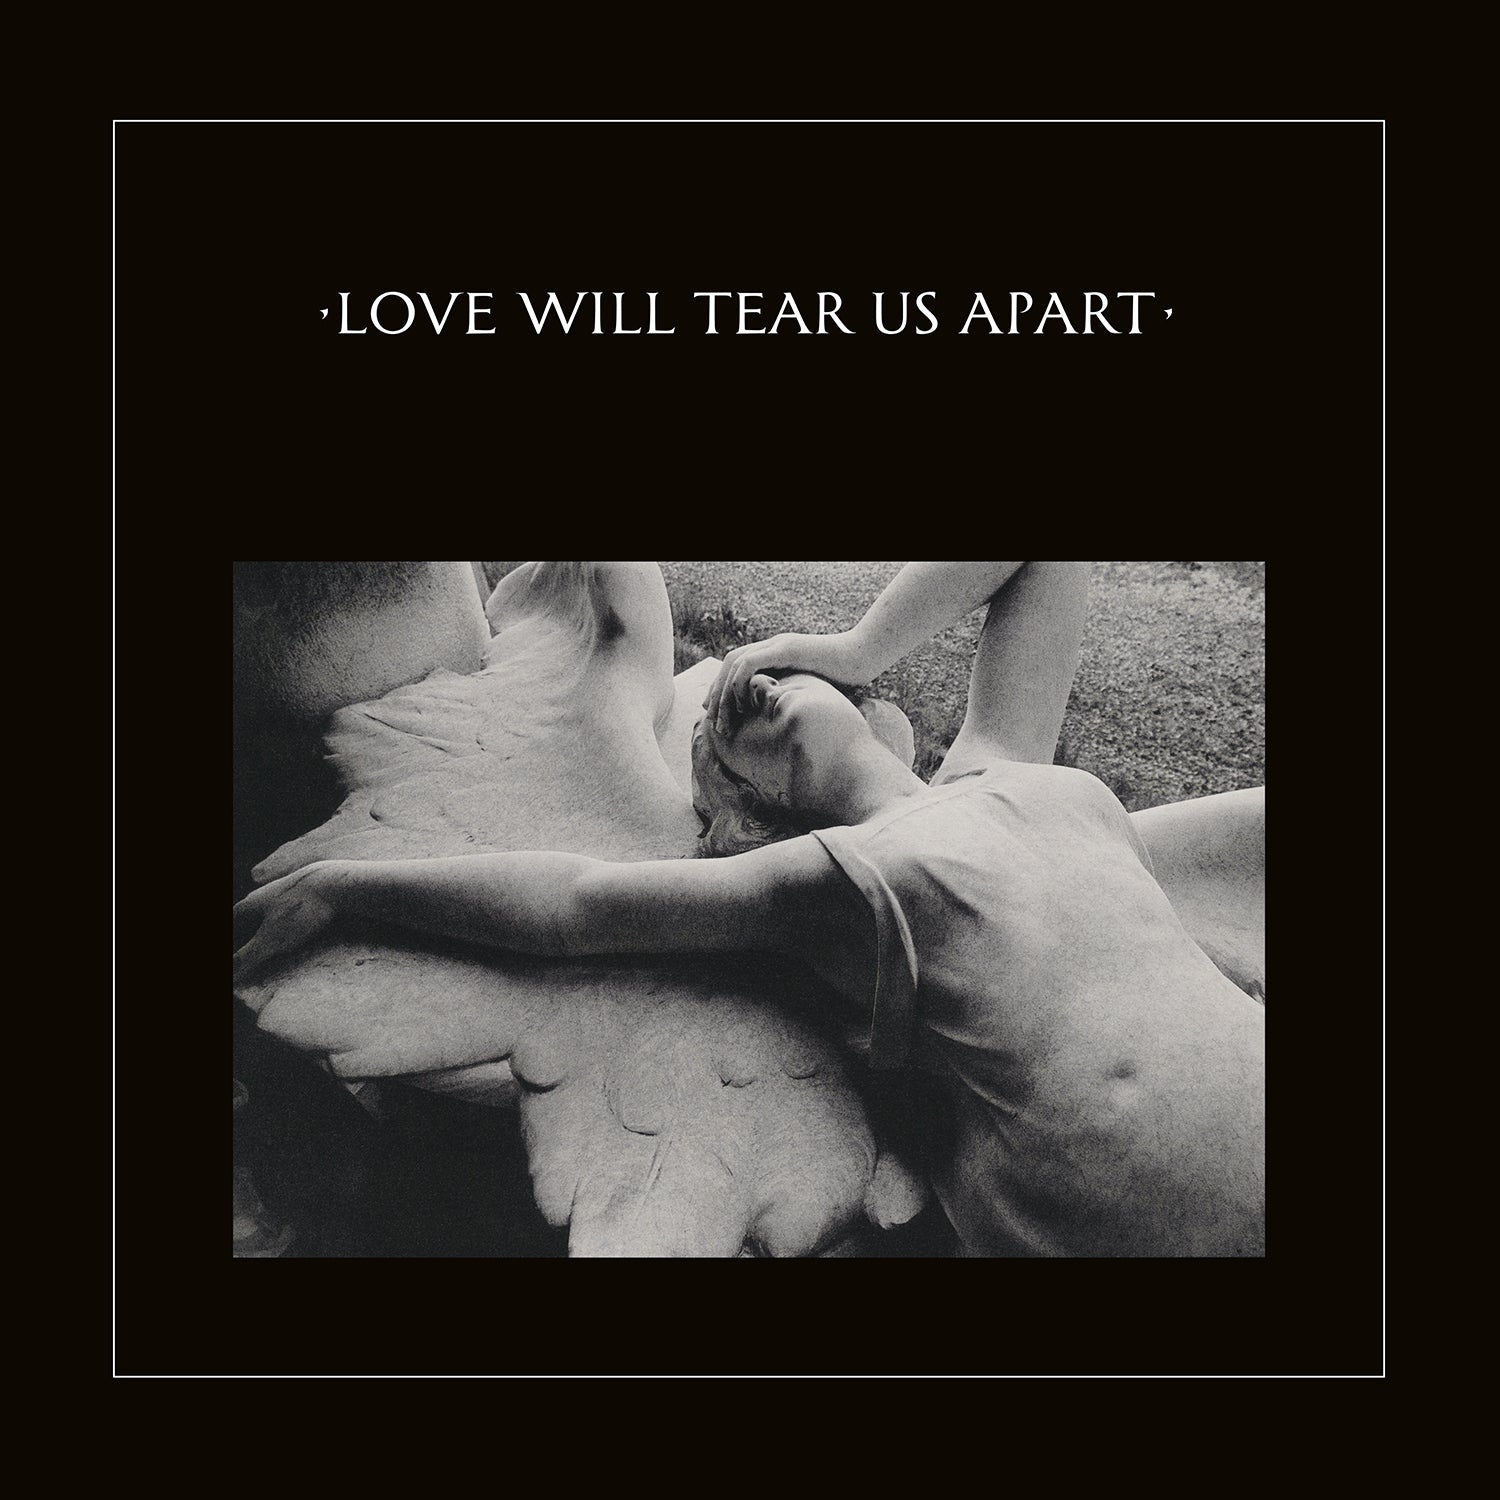 JOY DIVISION 'LOVE WILL TEAR US APART'